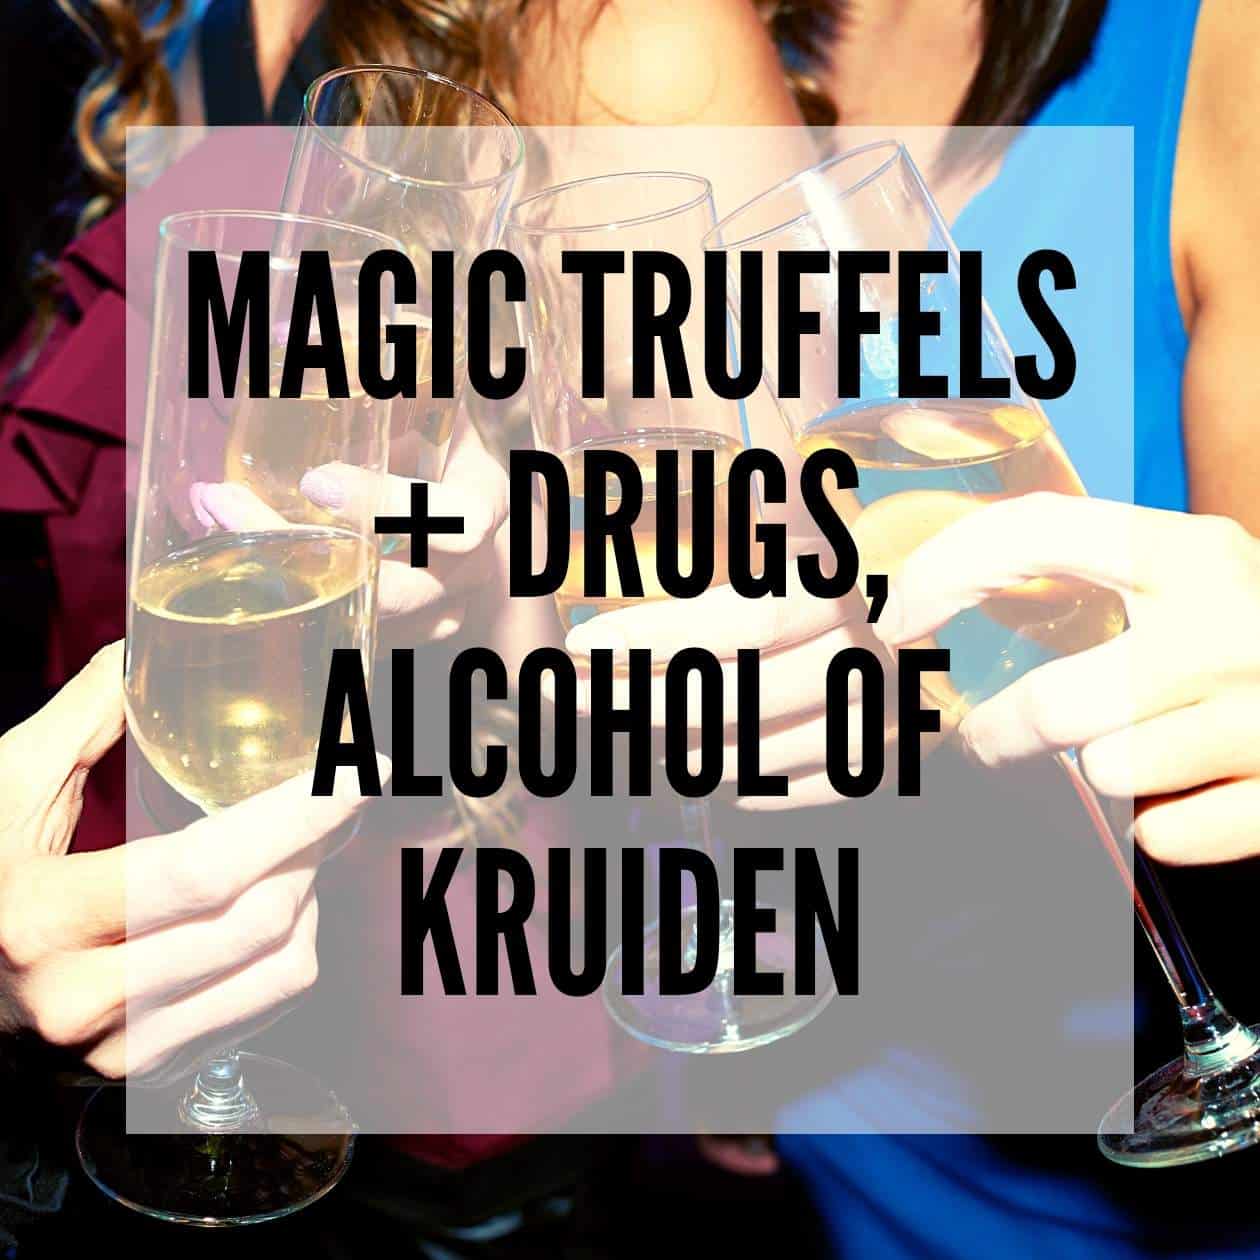 Magic Truffels mengen met andere drugs, alcohol of kruiden